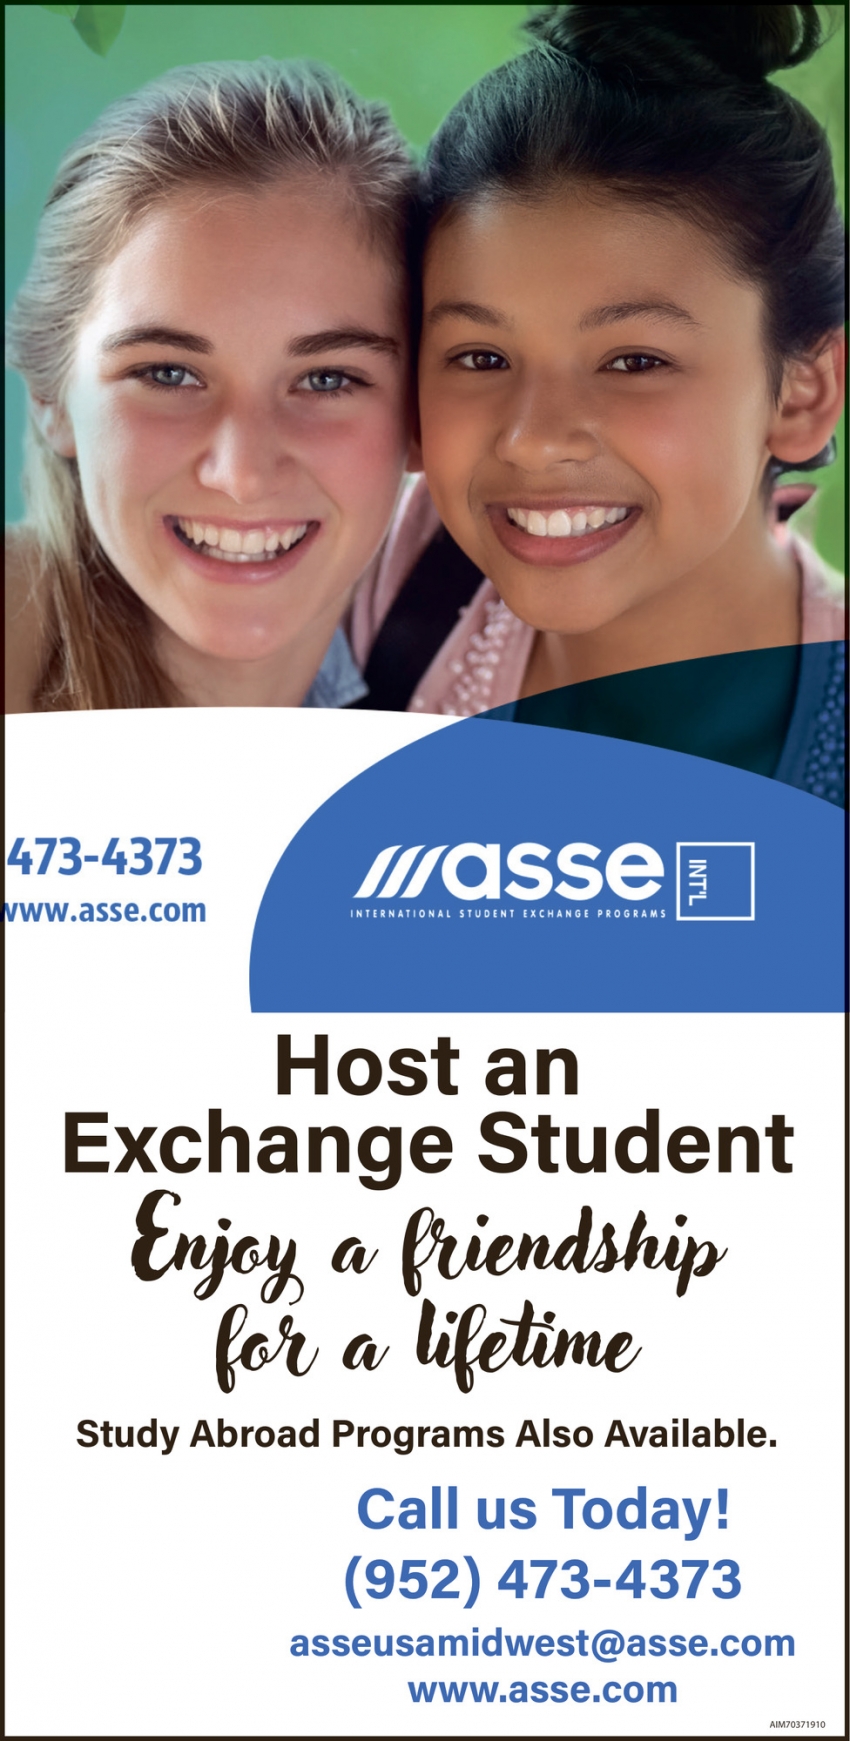 ASSE - International Student Exchange Programs